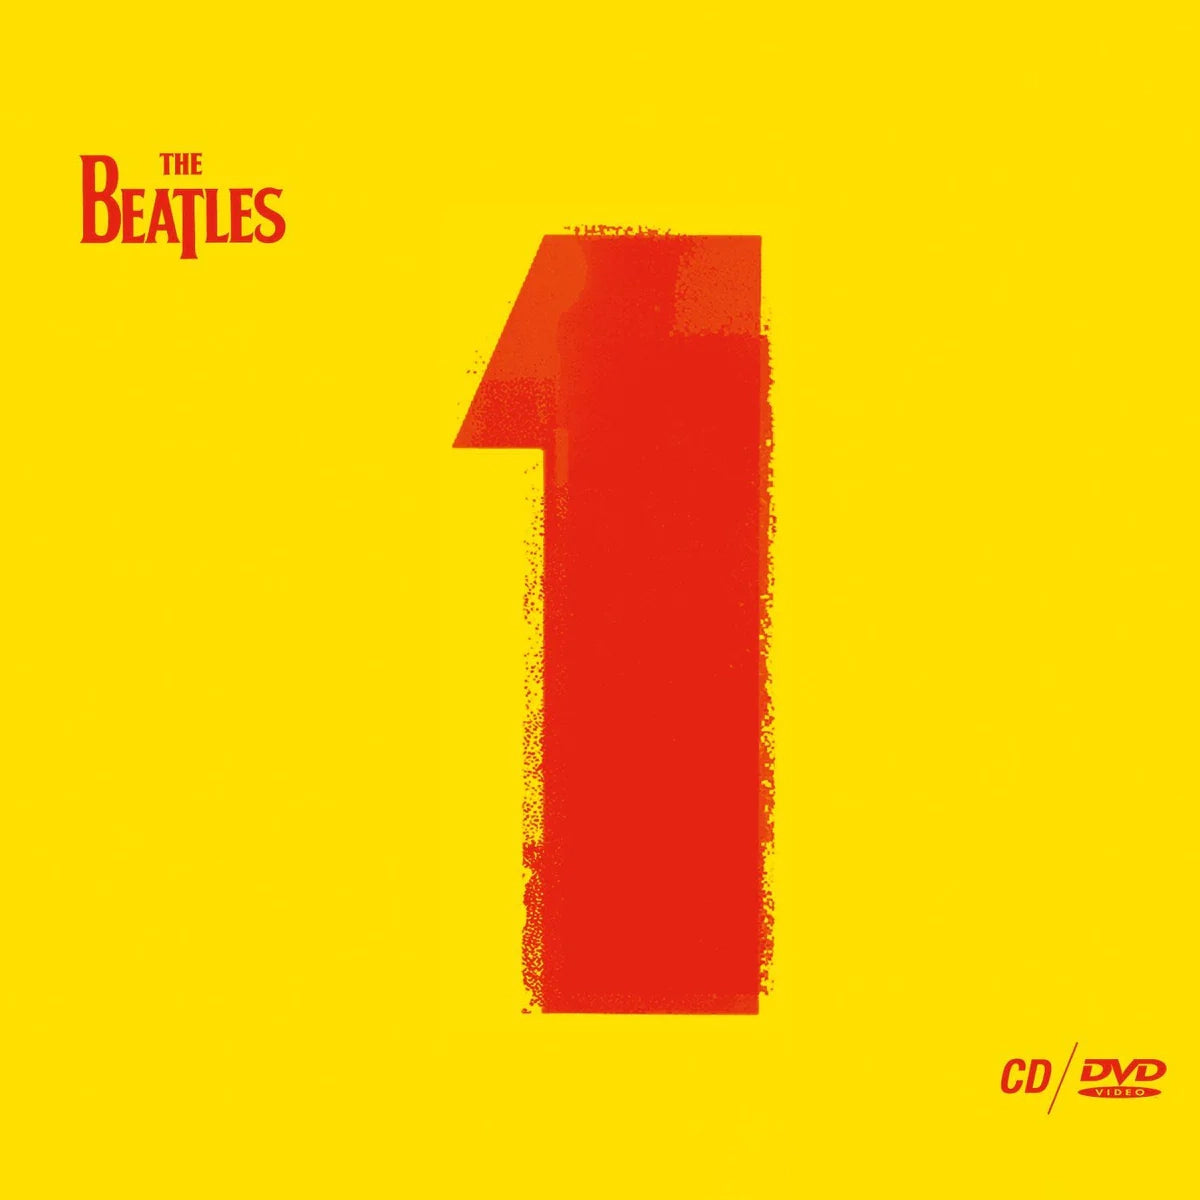 The Beatles - 1 (2015 CD & DVD)